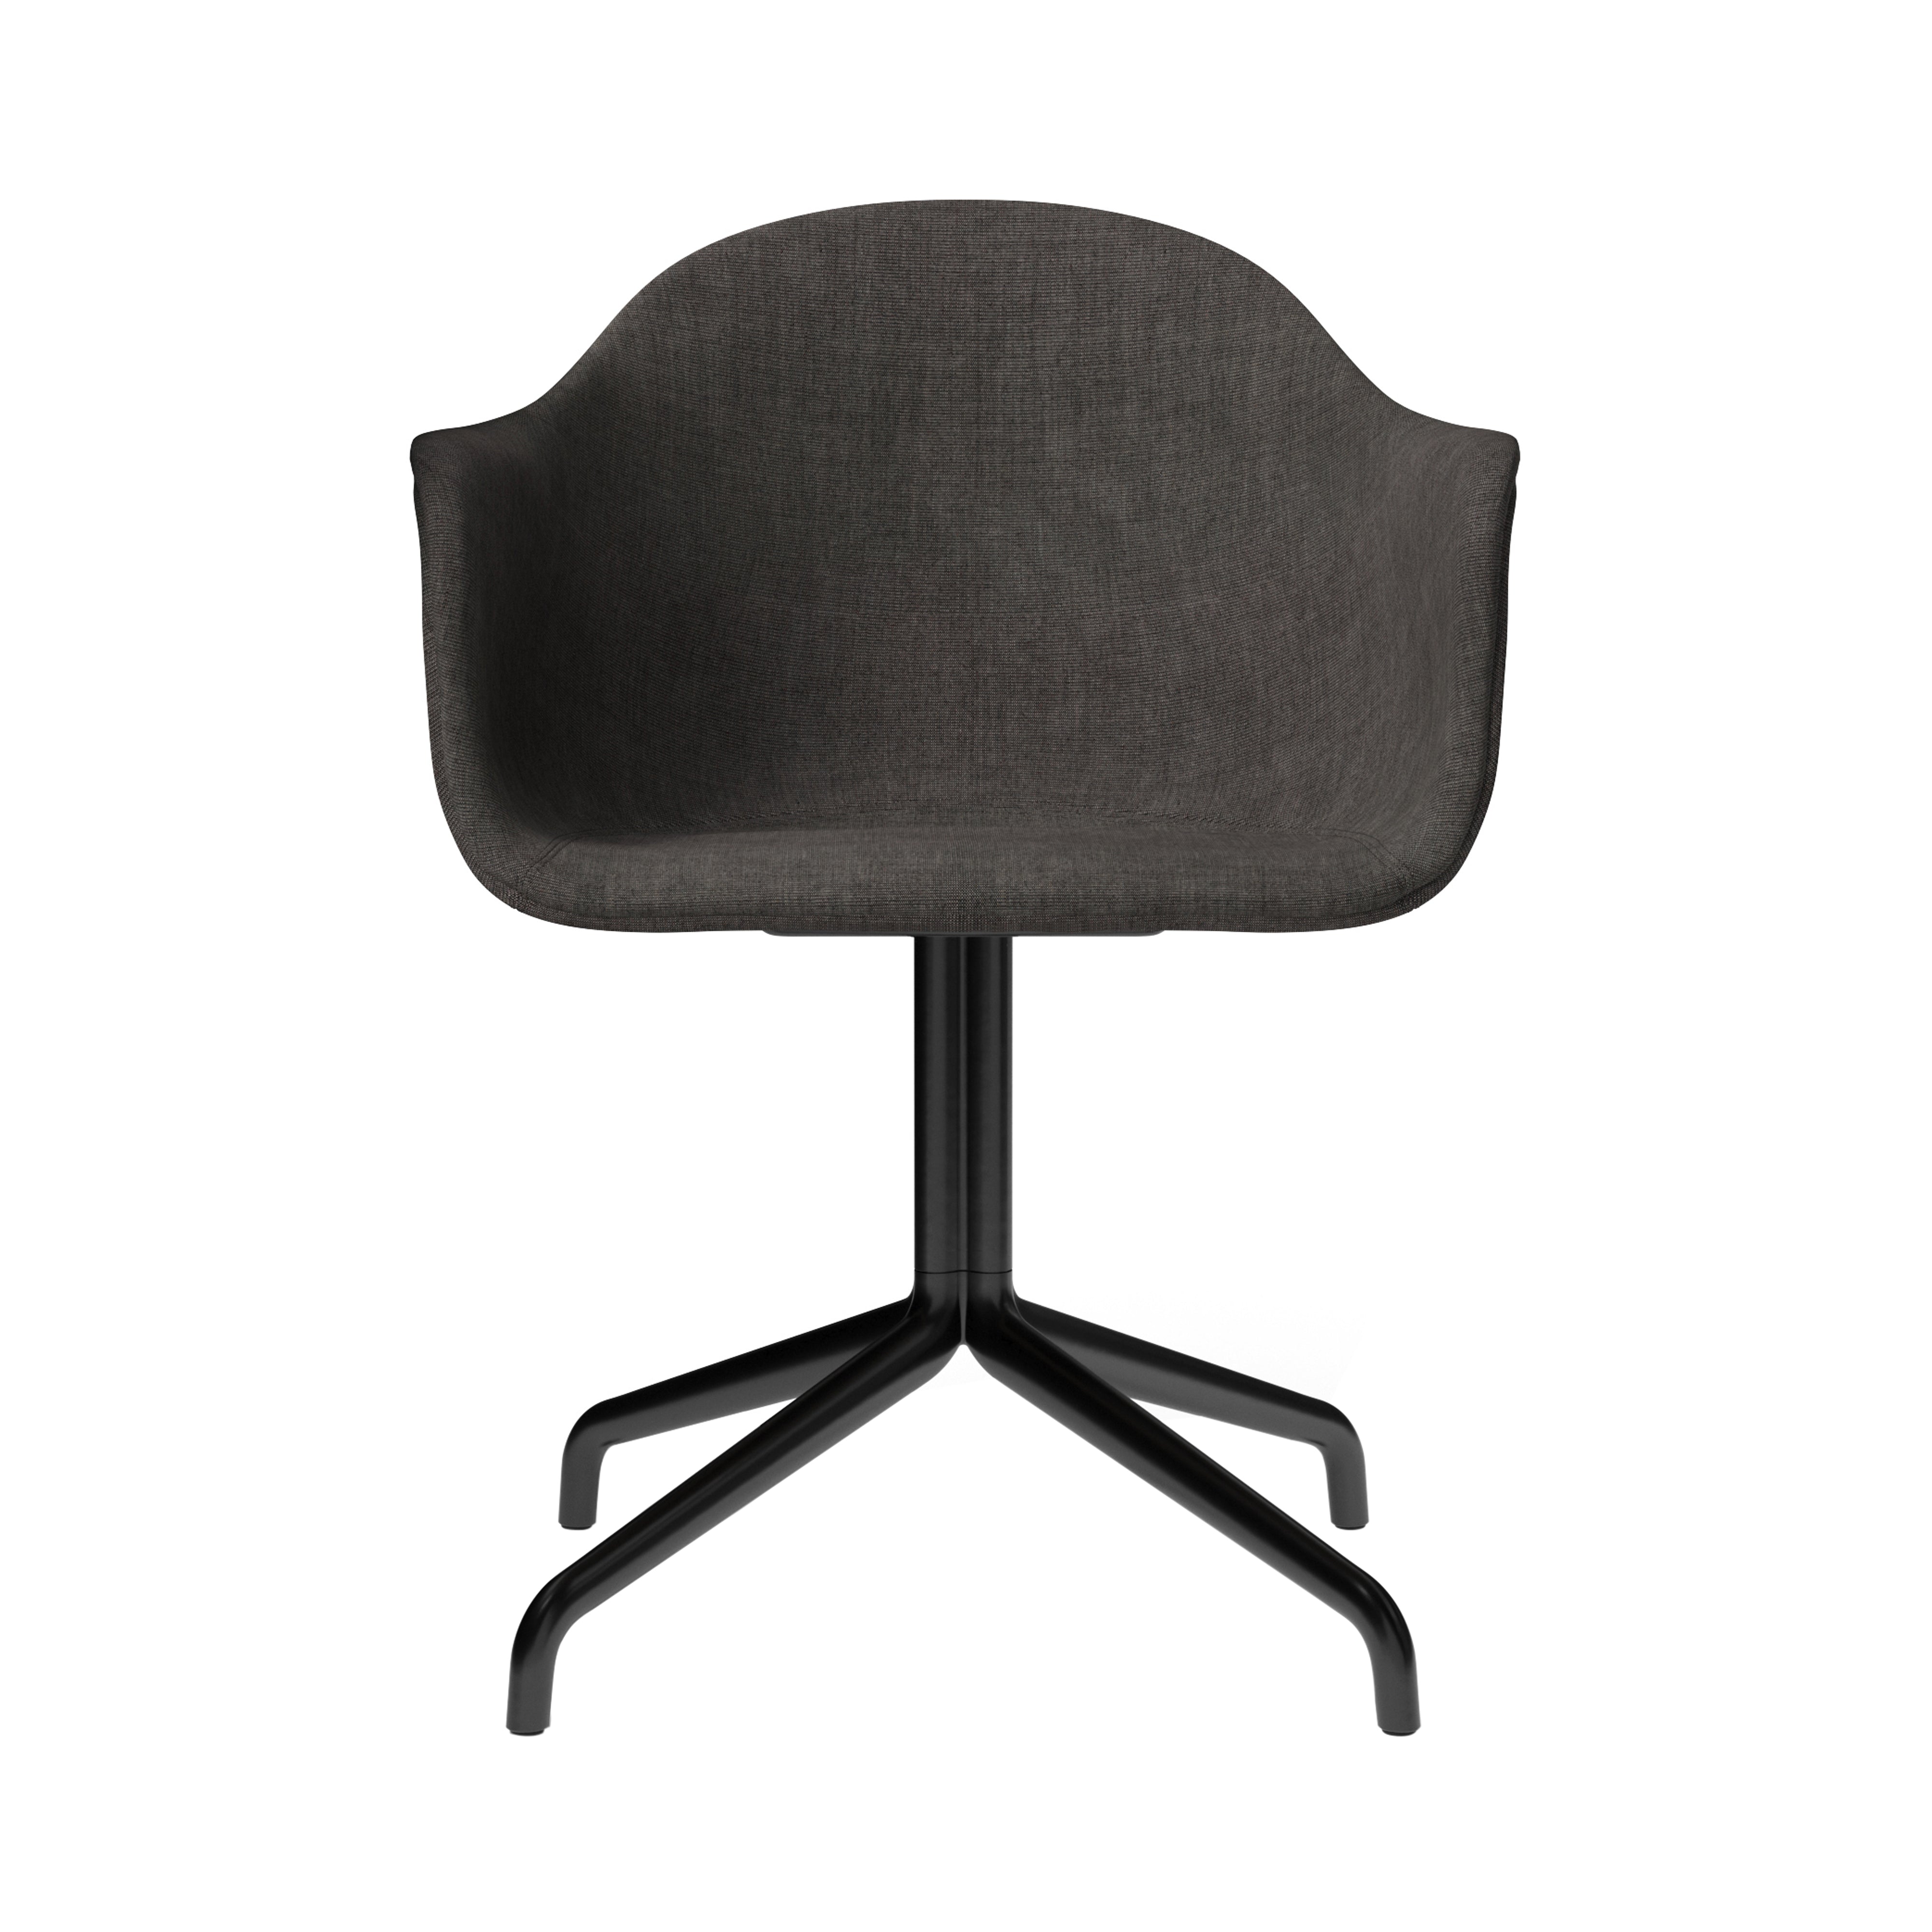 Harbour Dining Chair Star Base with Swivel Return: Fully Upholstered + Black Steel